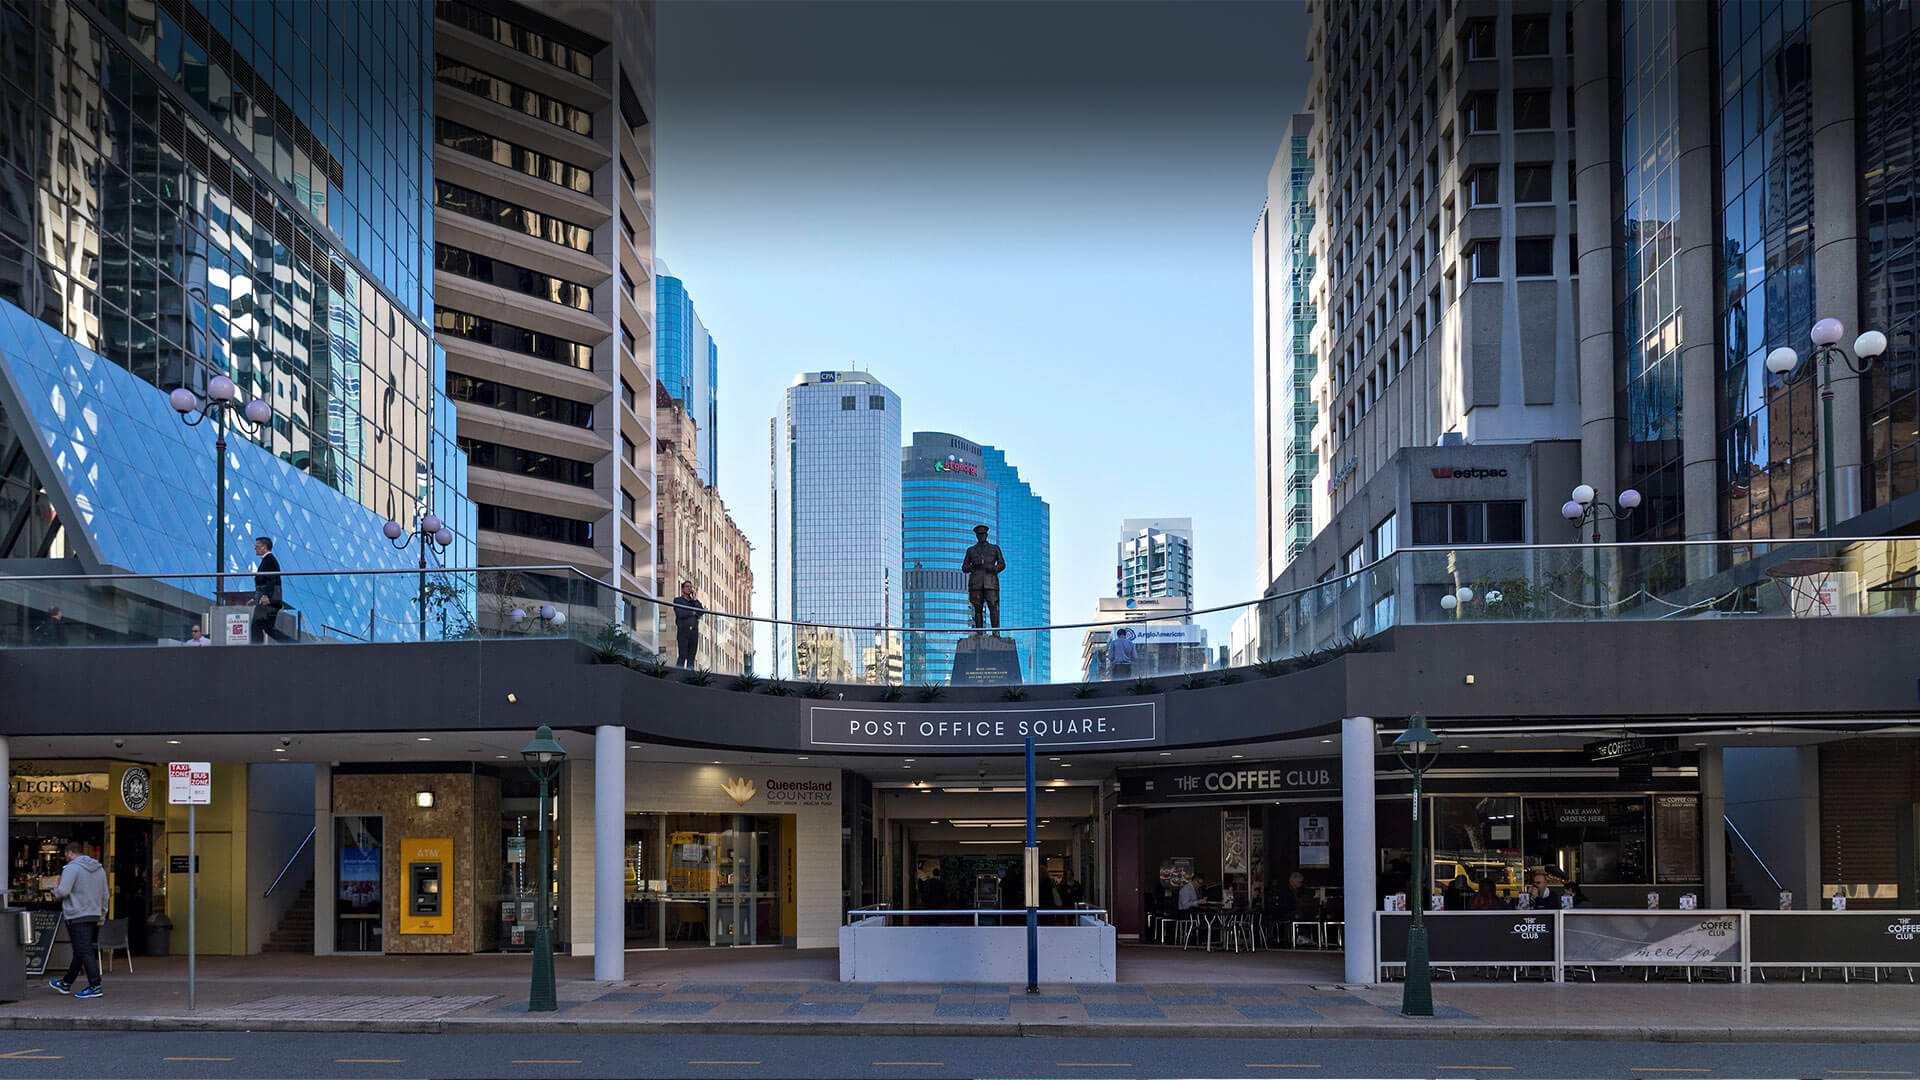 Post Office Square located near Dentice's Brisbane Oral & Maxillofacial Surgery Practice